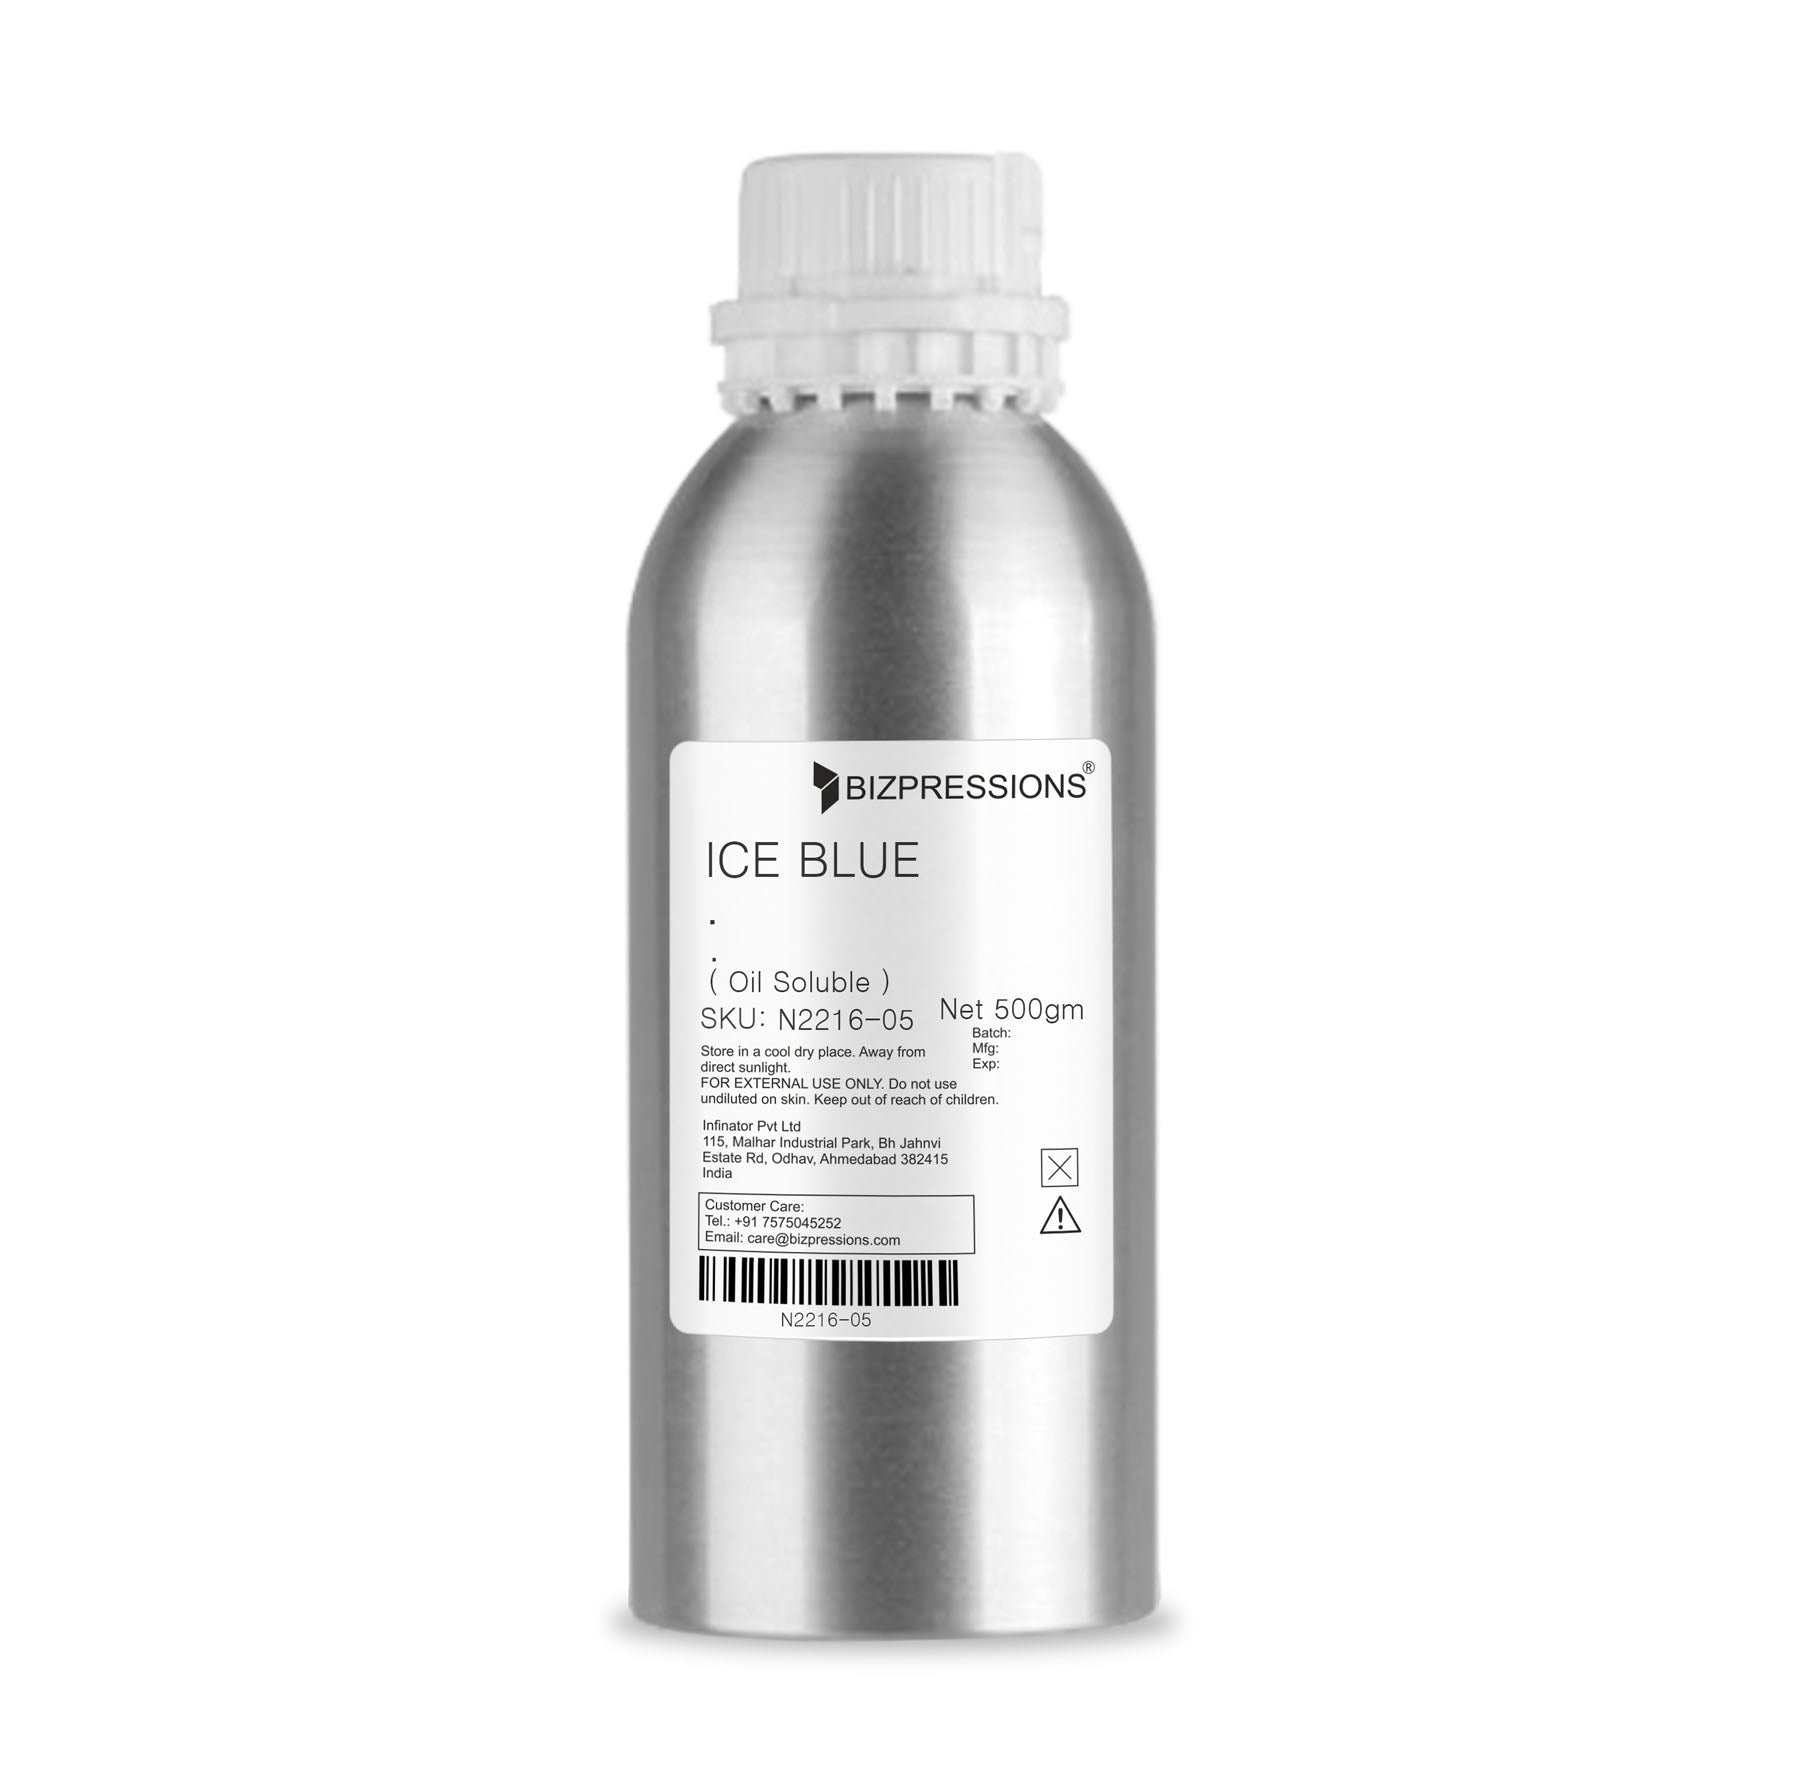 ICE BLUE - Fragrance ( Oil Soluble )